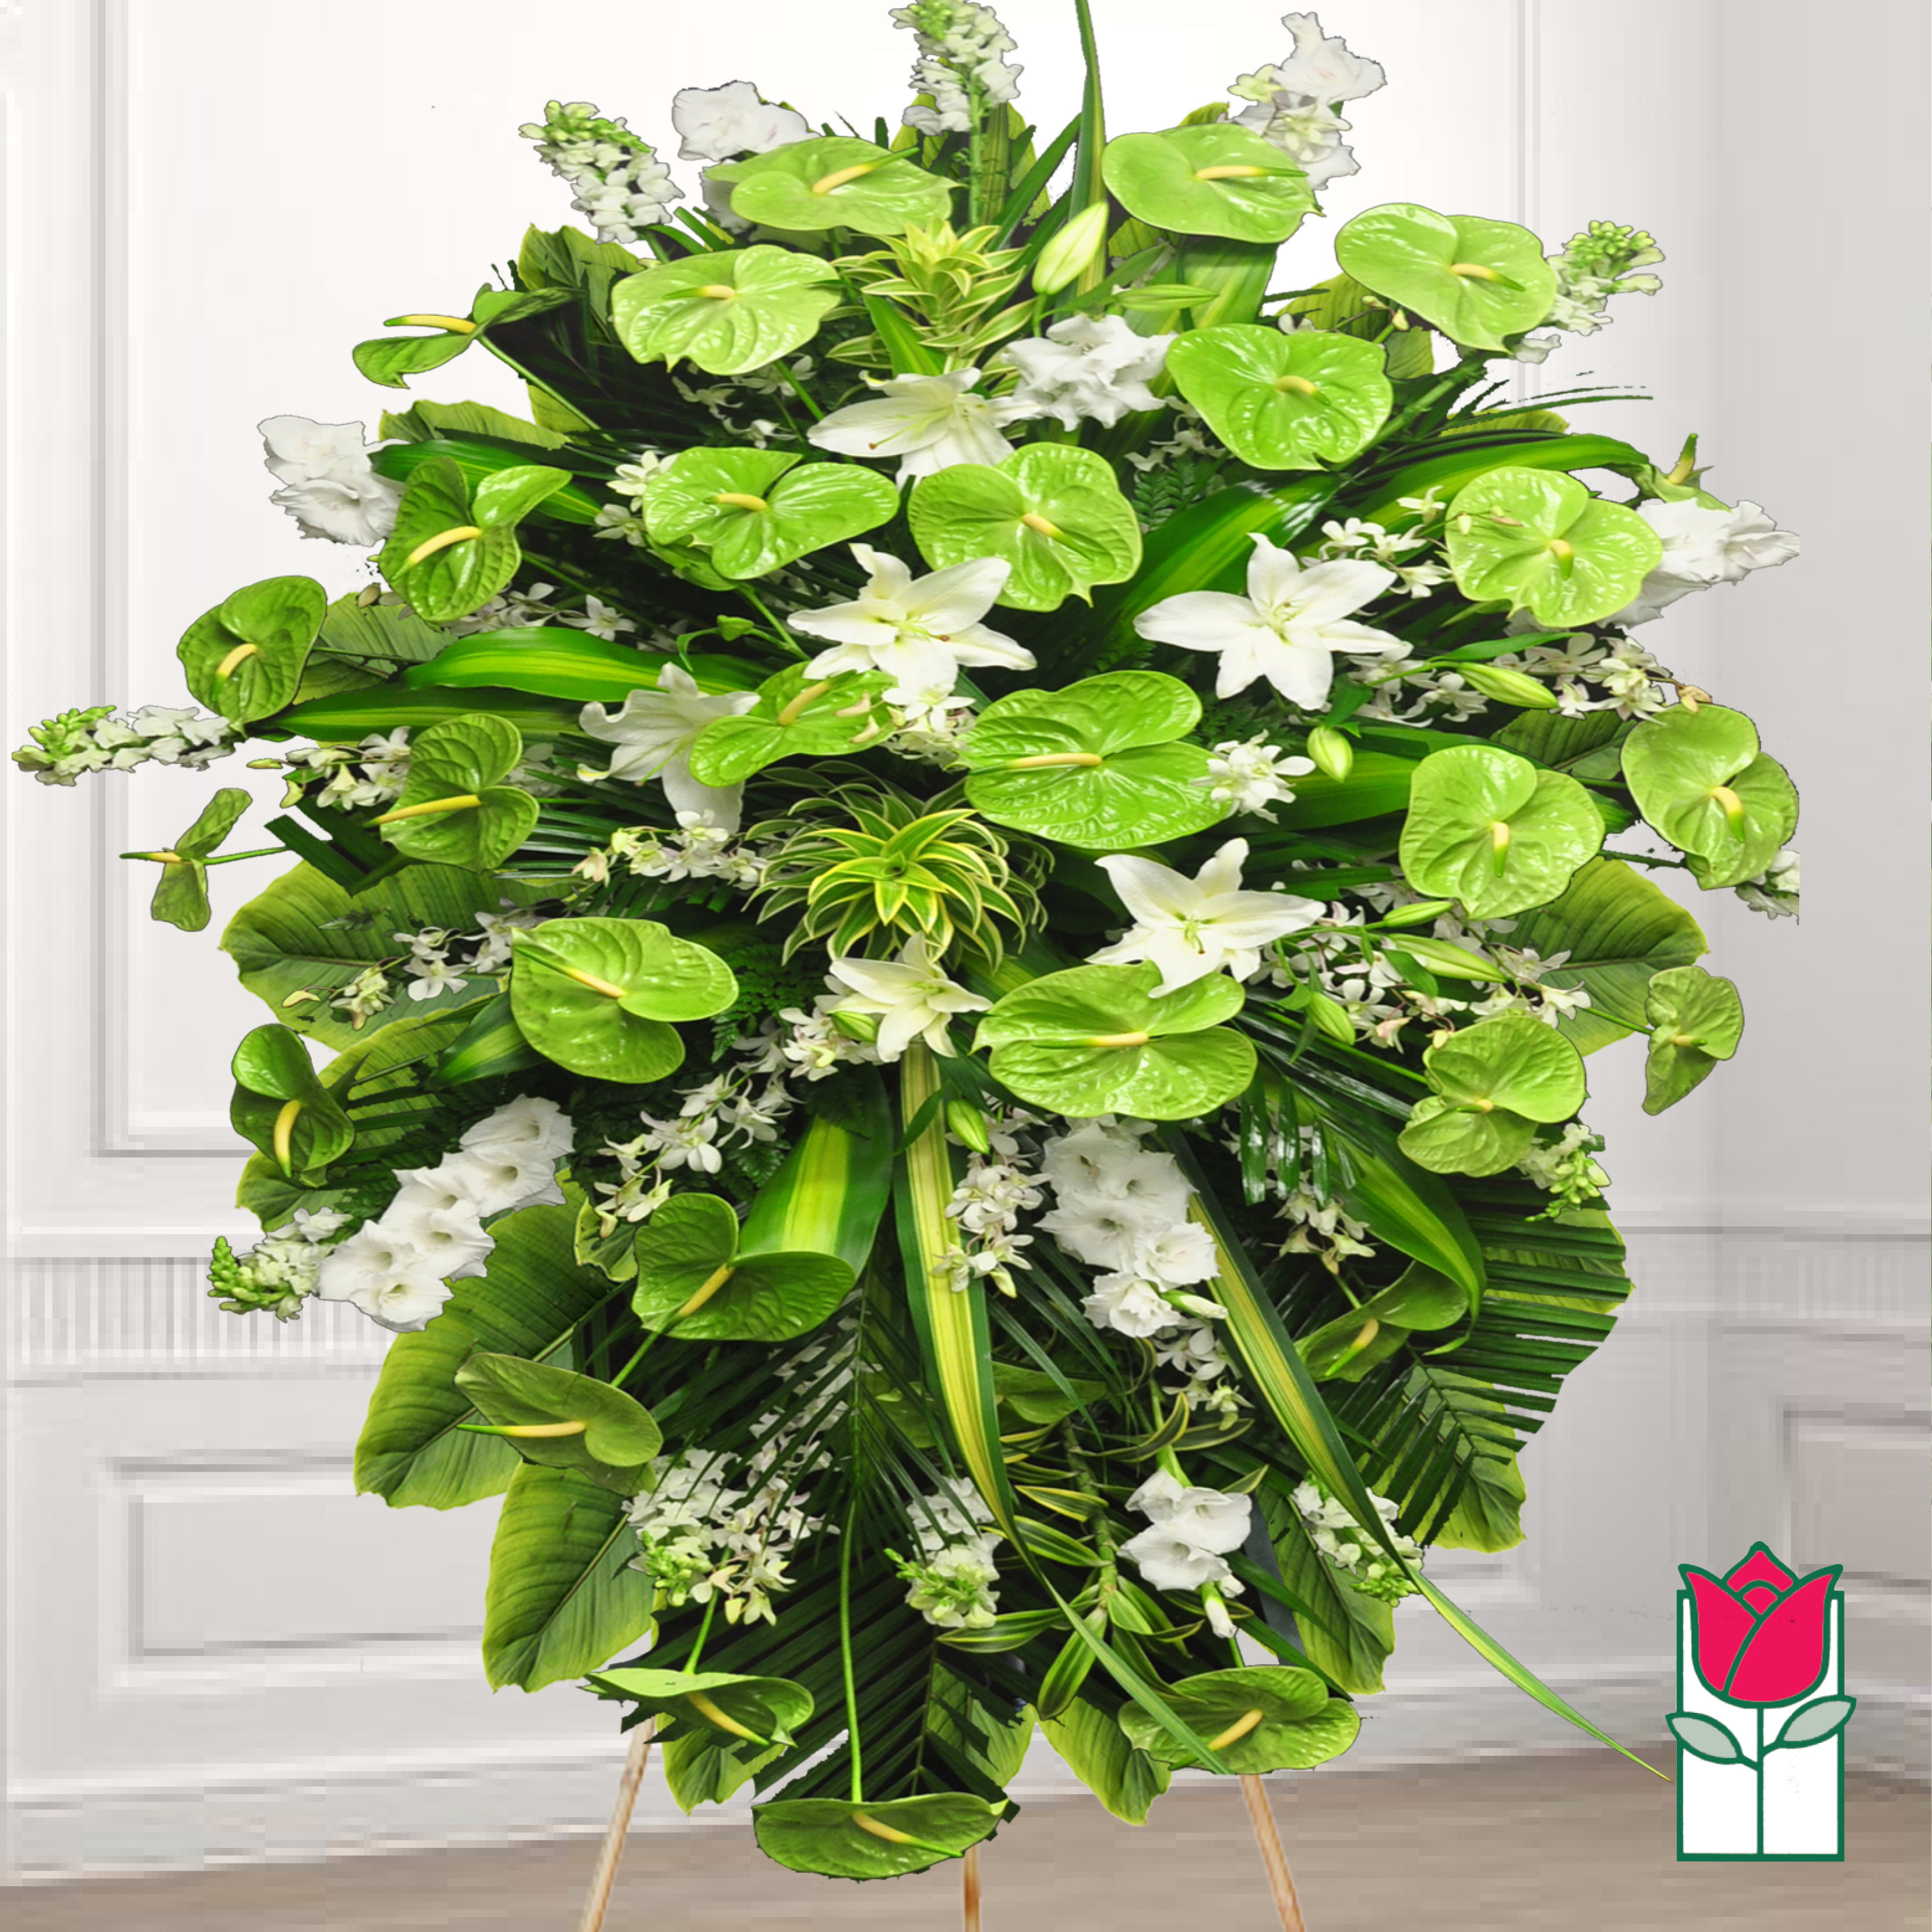 Beretania's Lanikai Wreath - Beretania Florist Lanikai Sympathy Wreath  Approx. 100H x 48W 